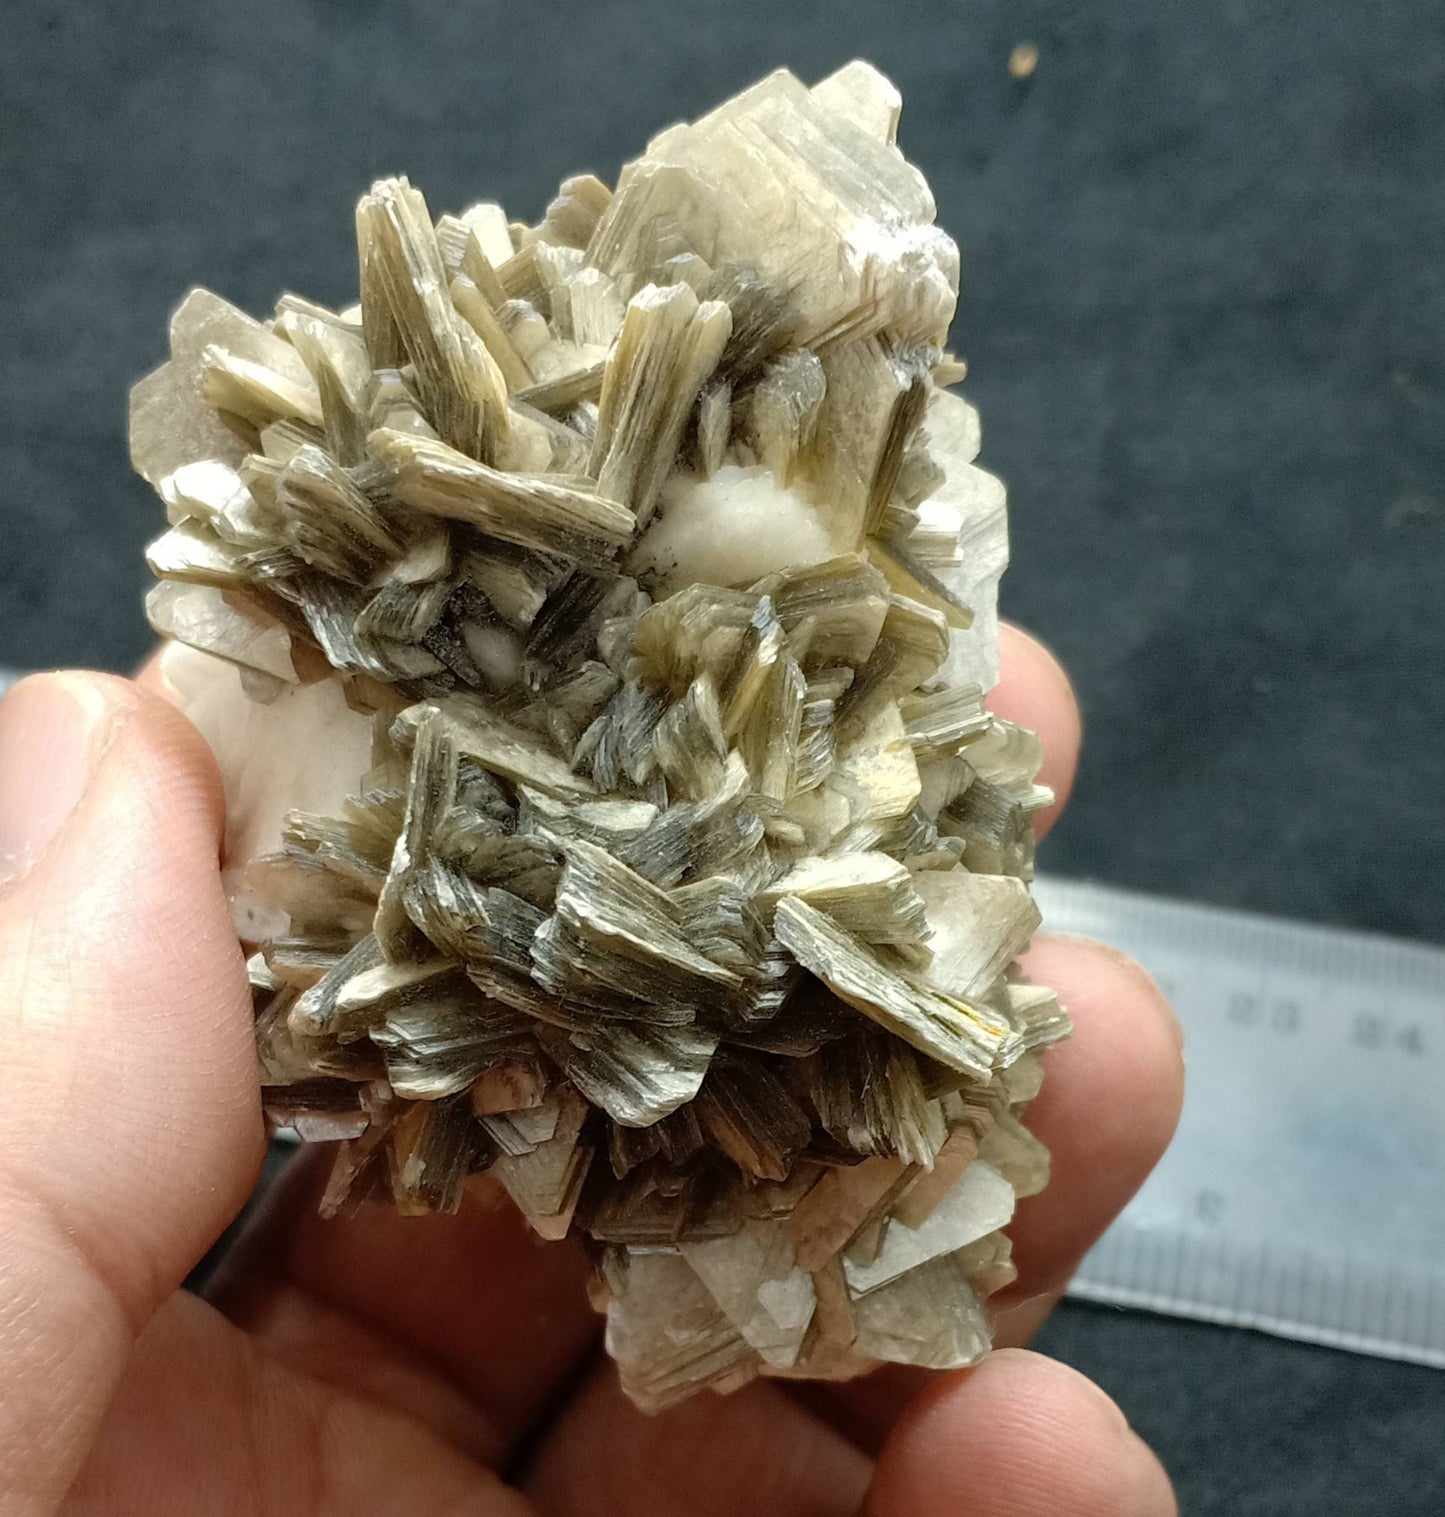 Natural specimen of combination of Albite, Schorl, and Muscovite 137 grams